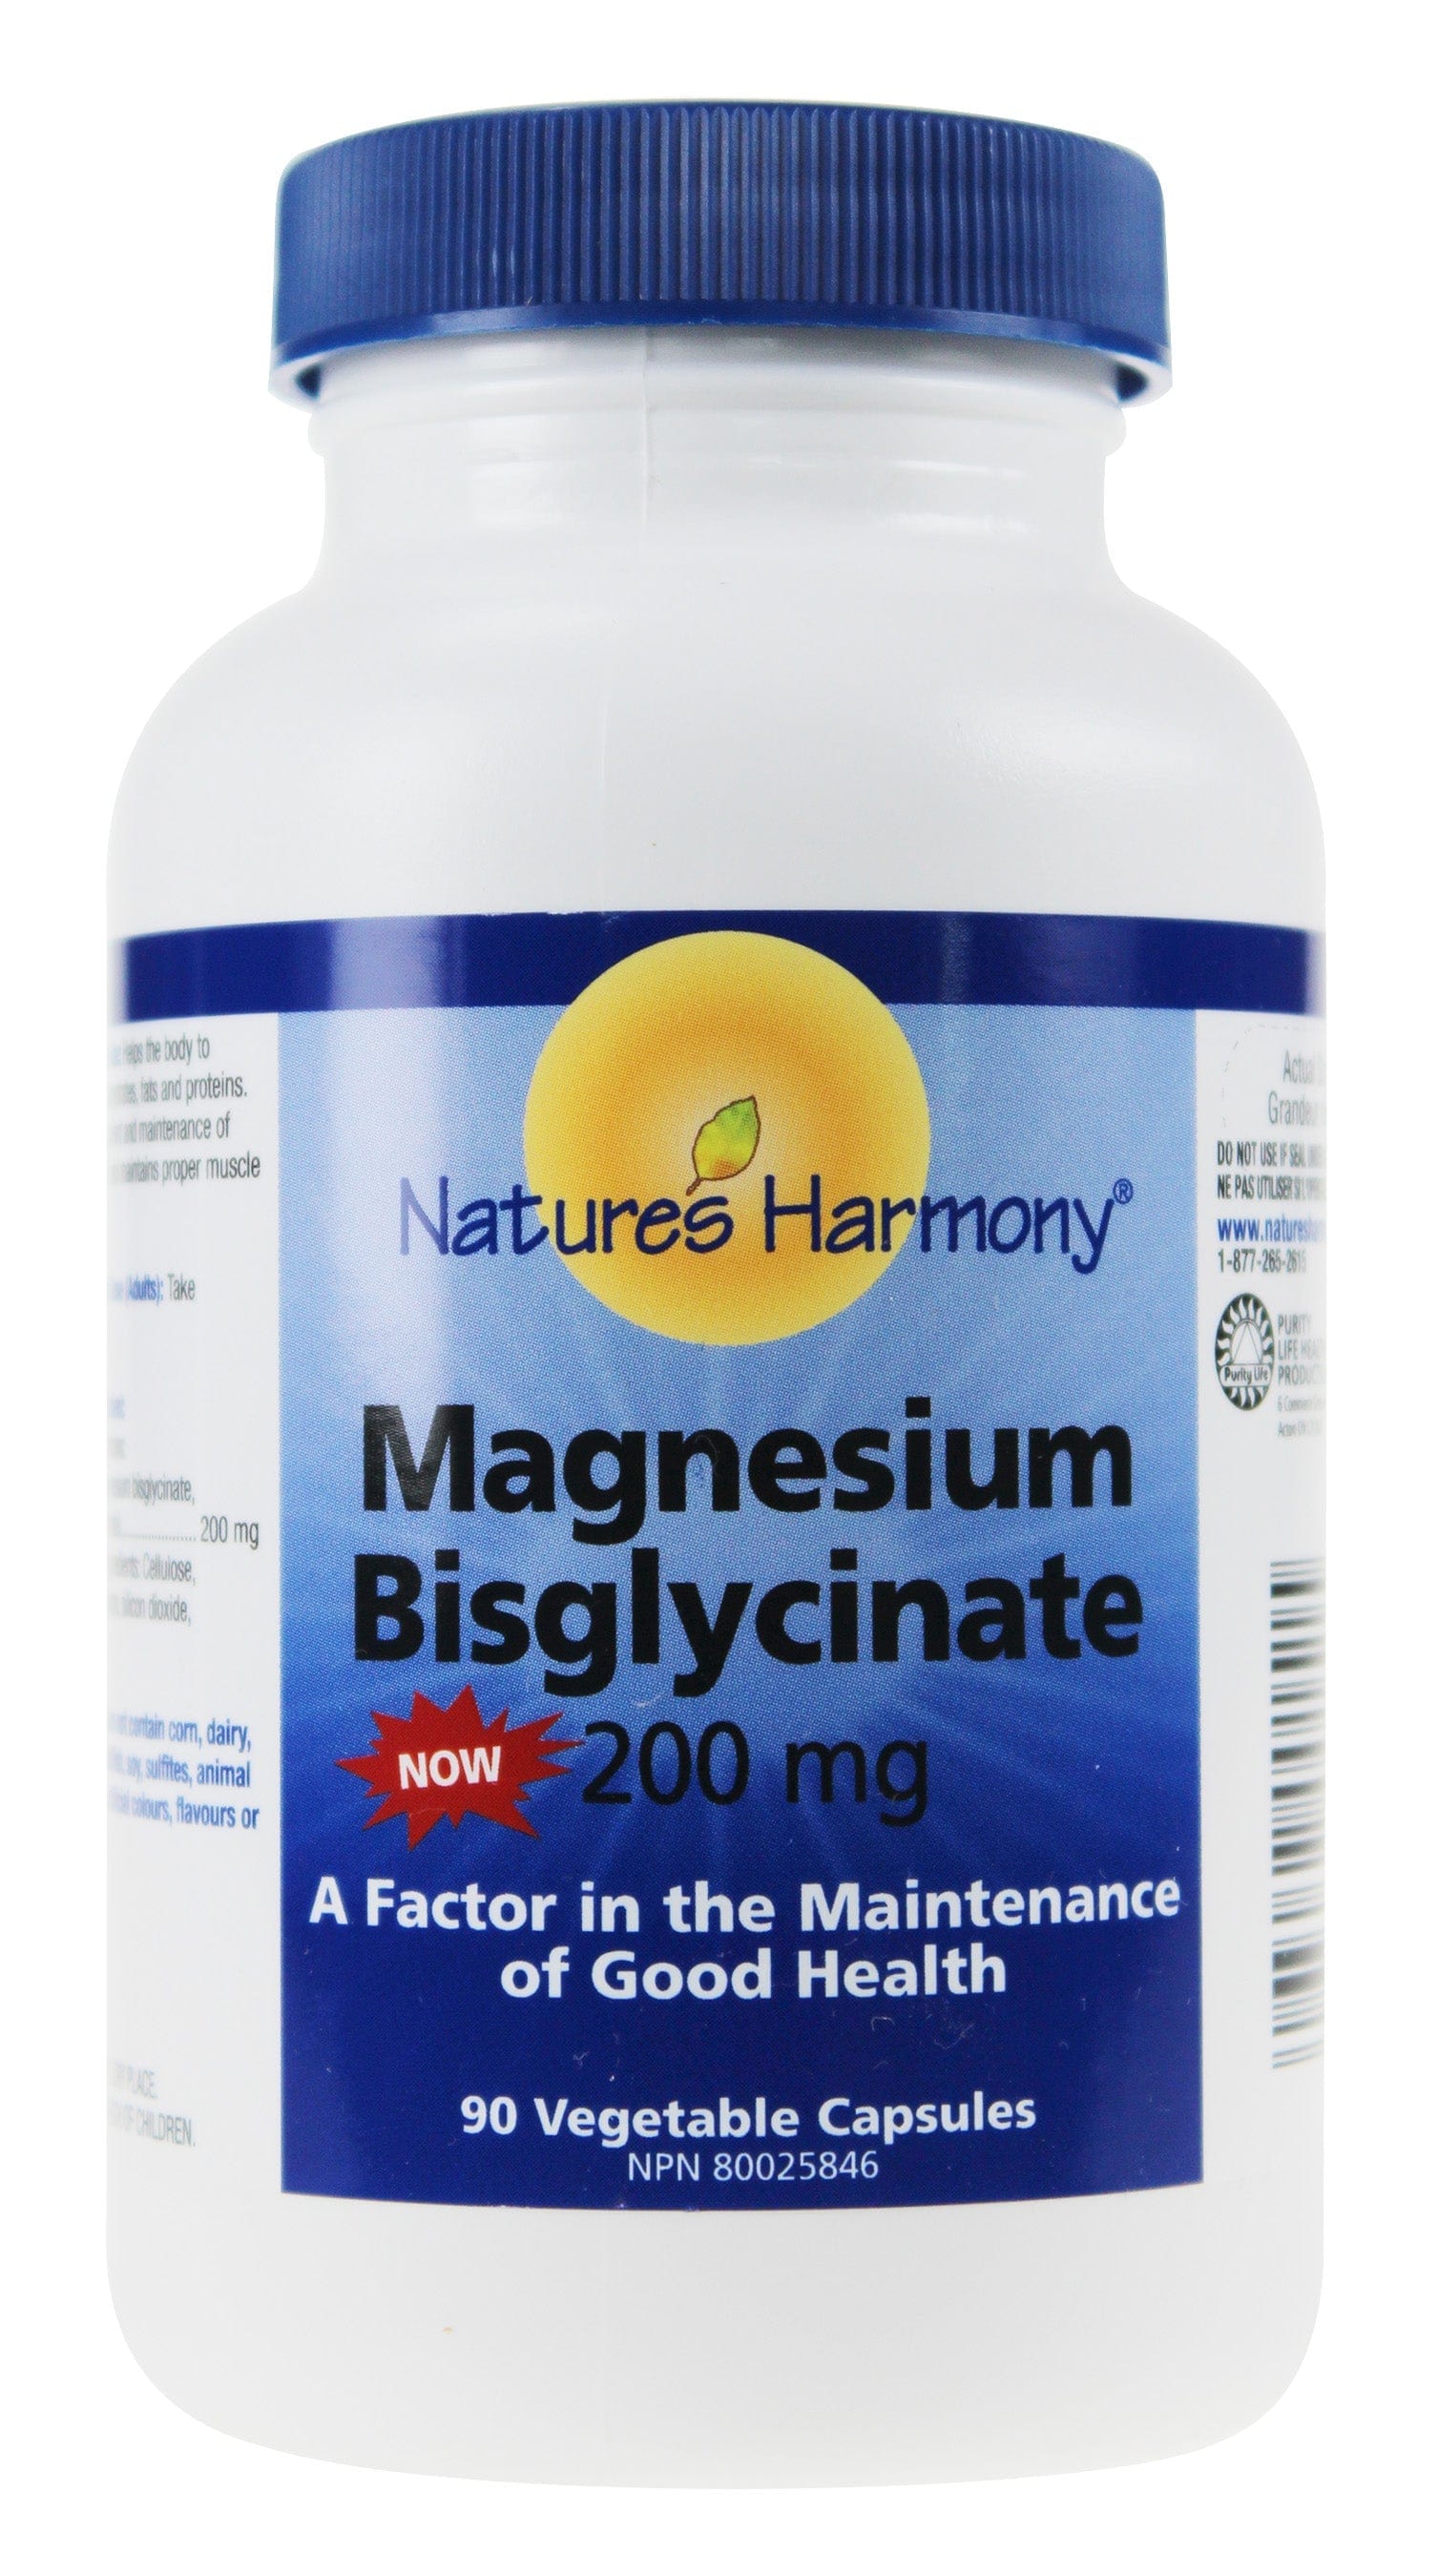 NATURE'S HARMONY Suppléments Magnésium bisglycinate (200mg) 90vcaps